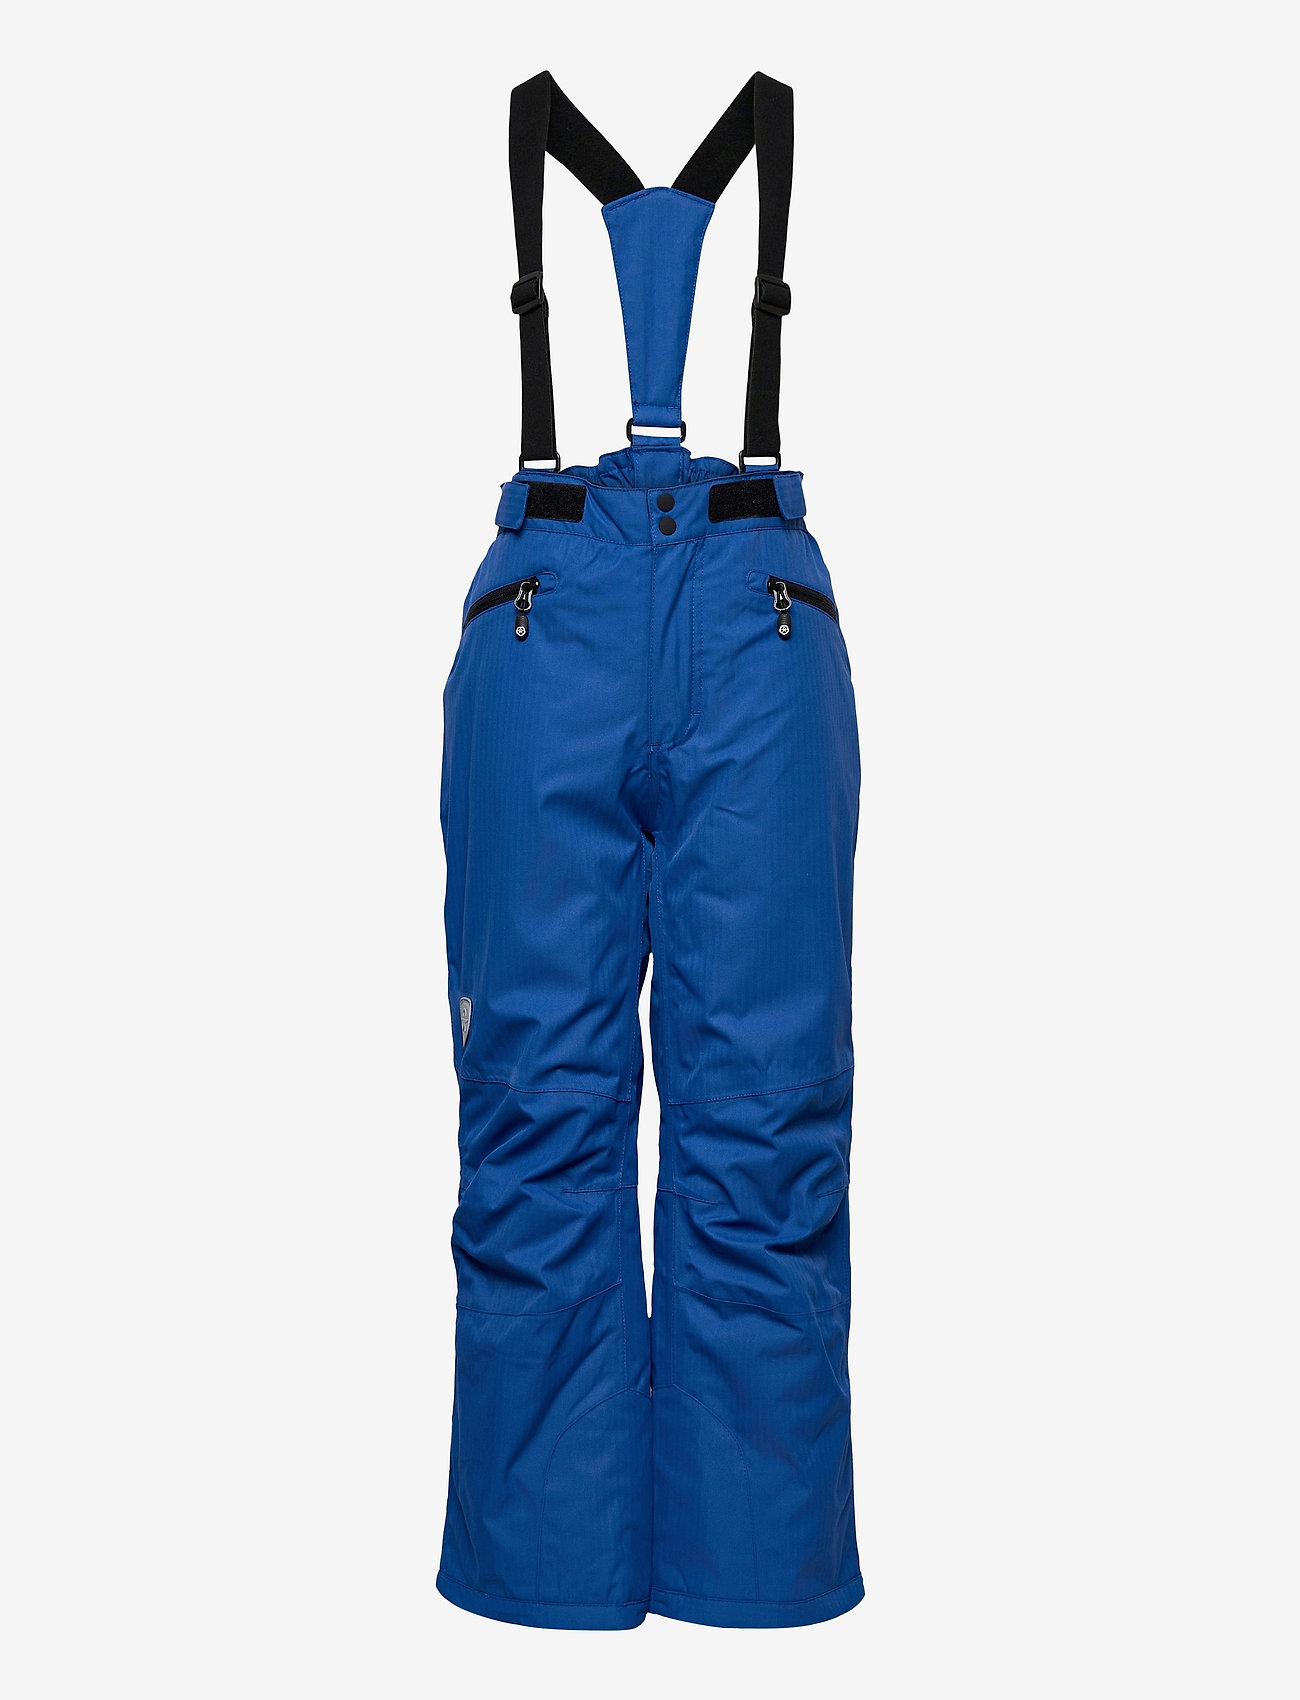 Color Kids - Ski pants w/Pockets, AF 10.000 - winter trousers - galaxy blue - 0